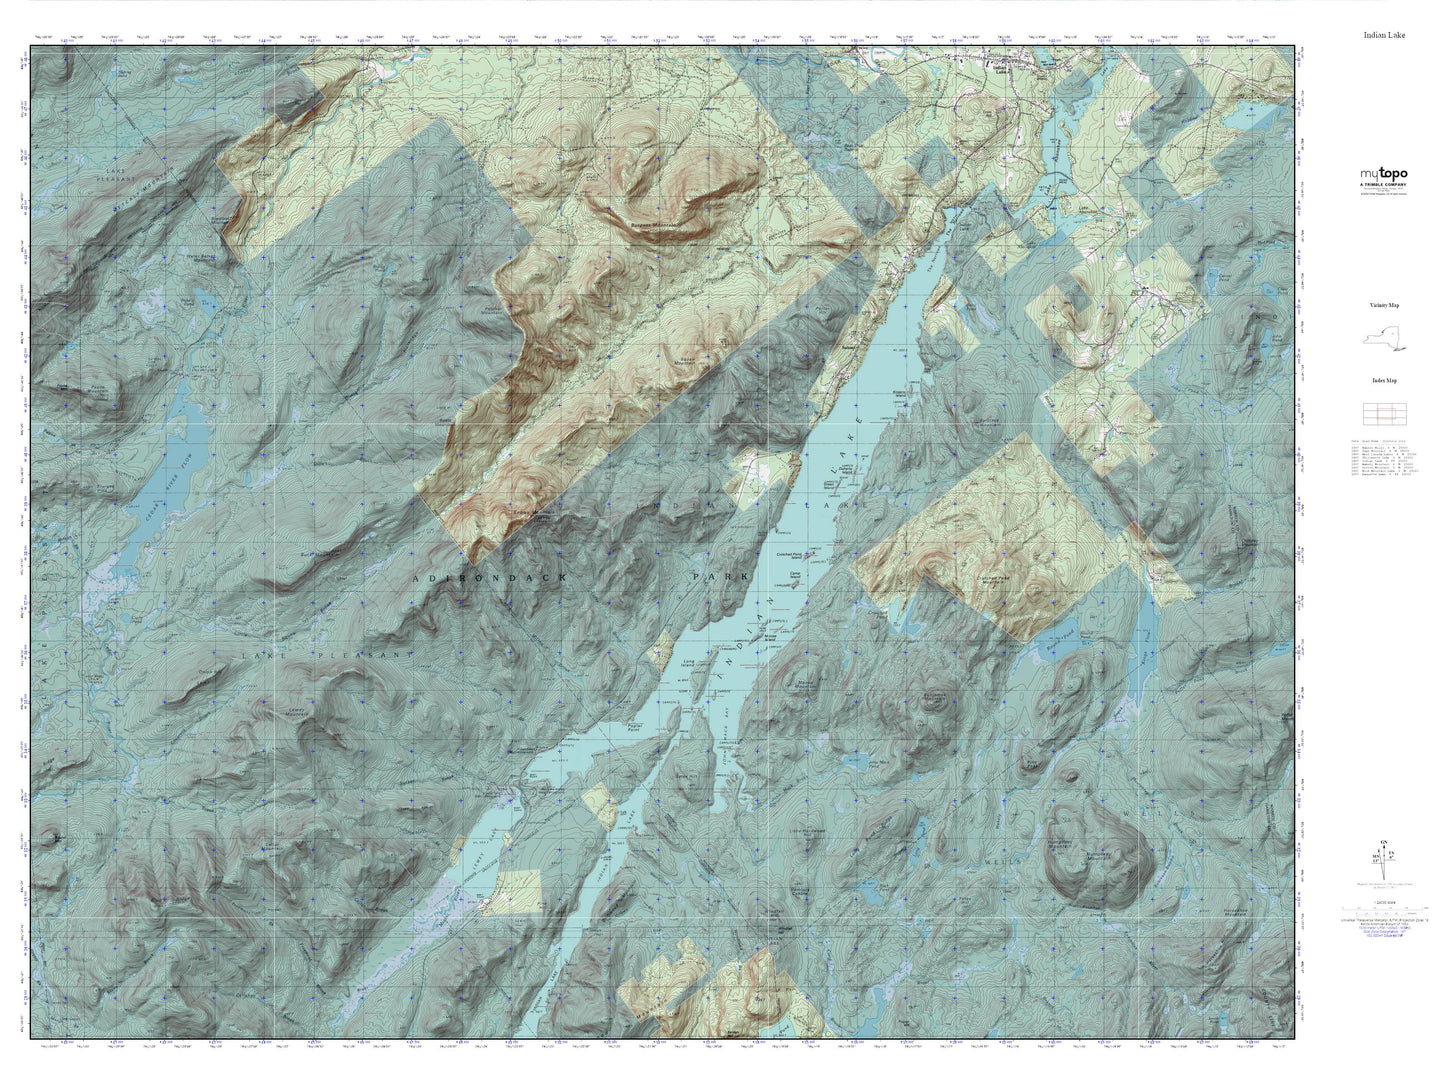 Indian Lake MyTopo Explorer Series Map Image